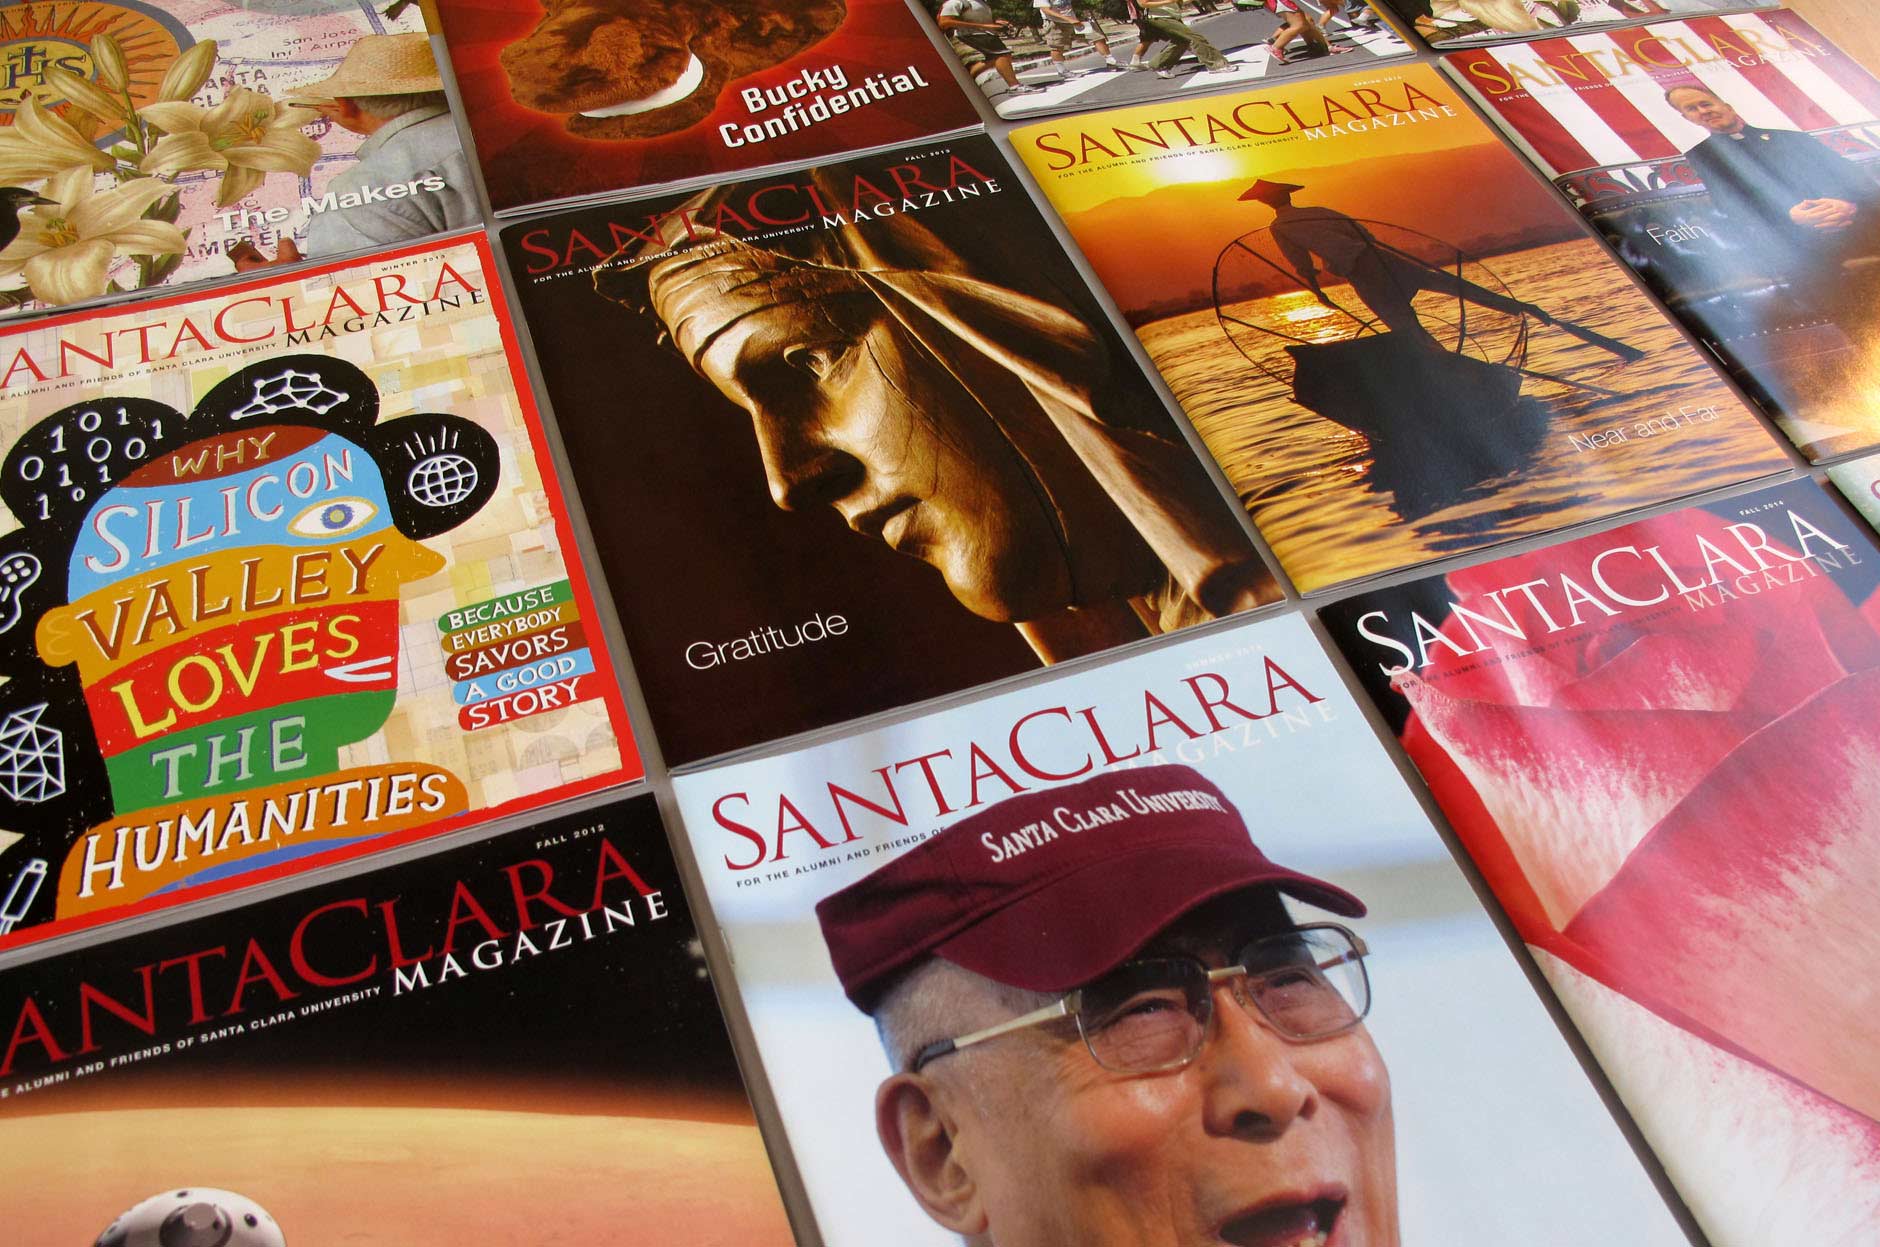 Santa Clara University Alumni Magazine: Editorial Layouts